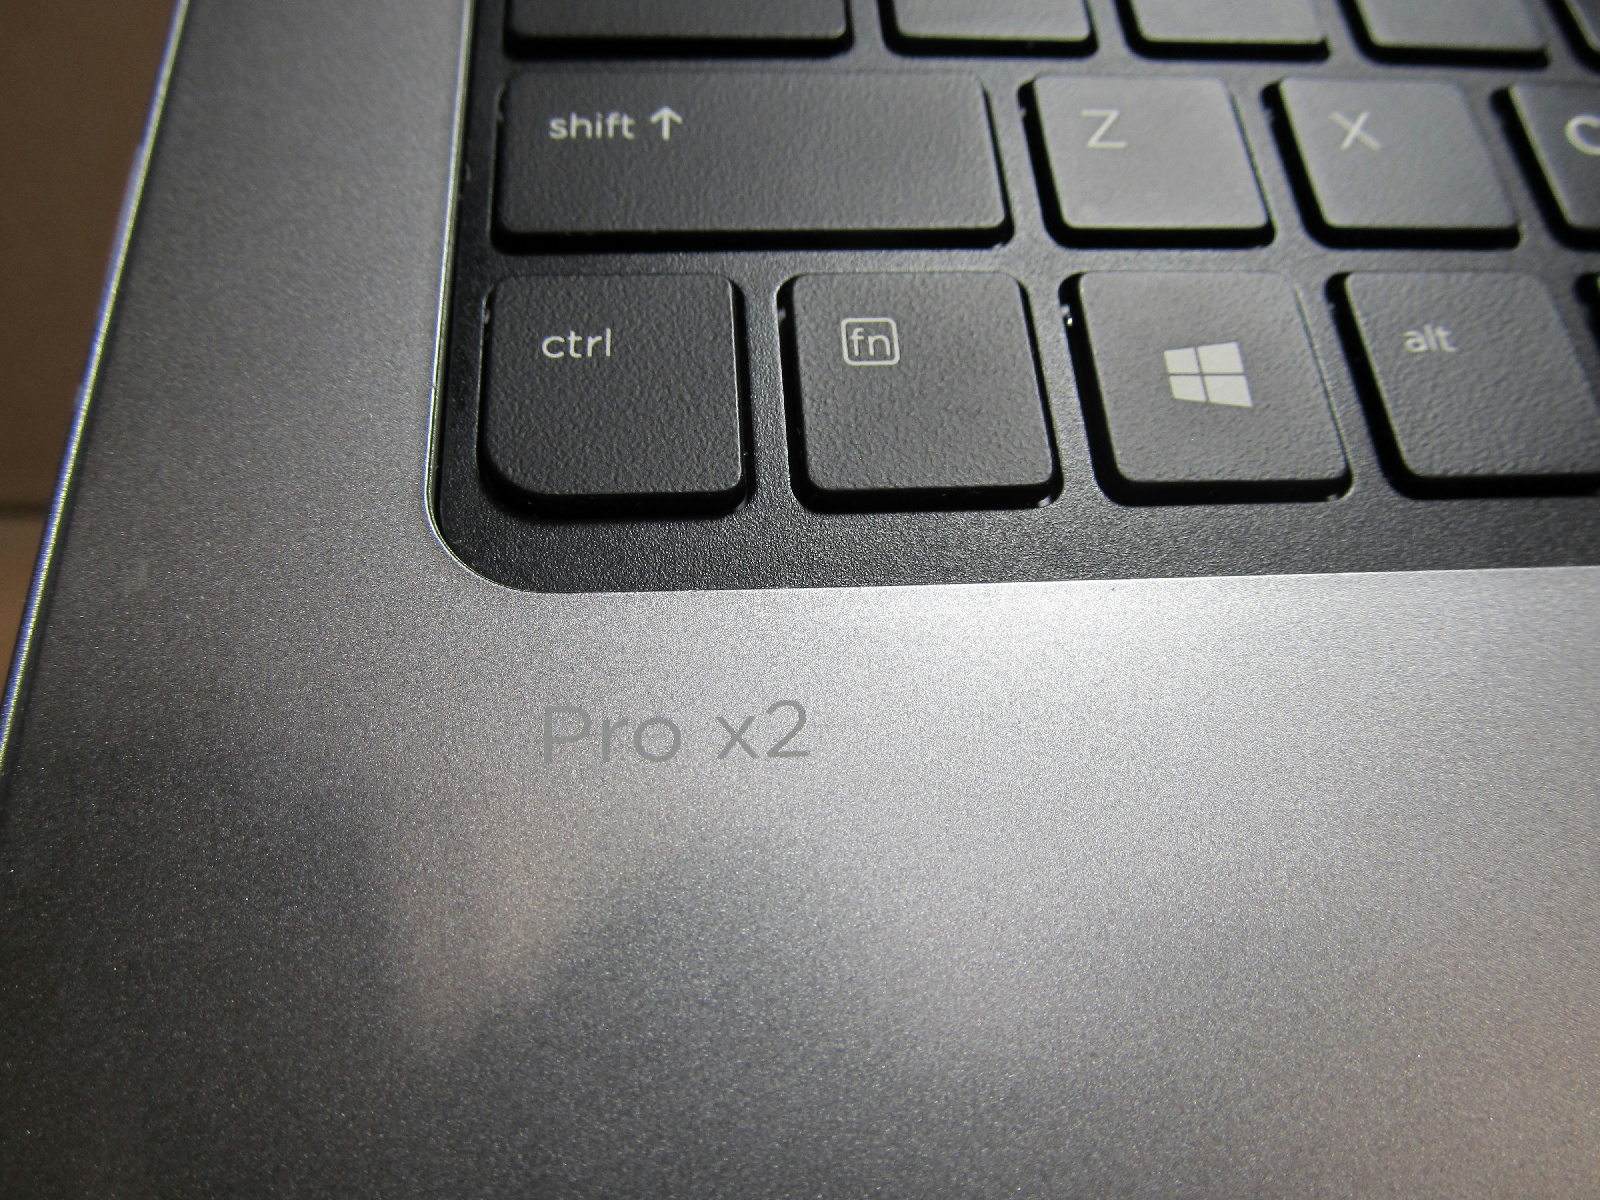 hp pro x2 612 g1 power keyboard